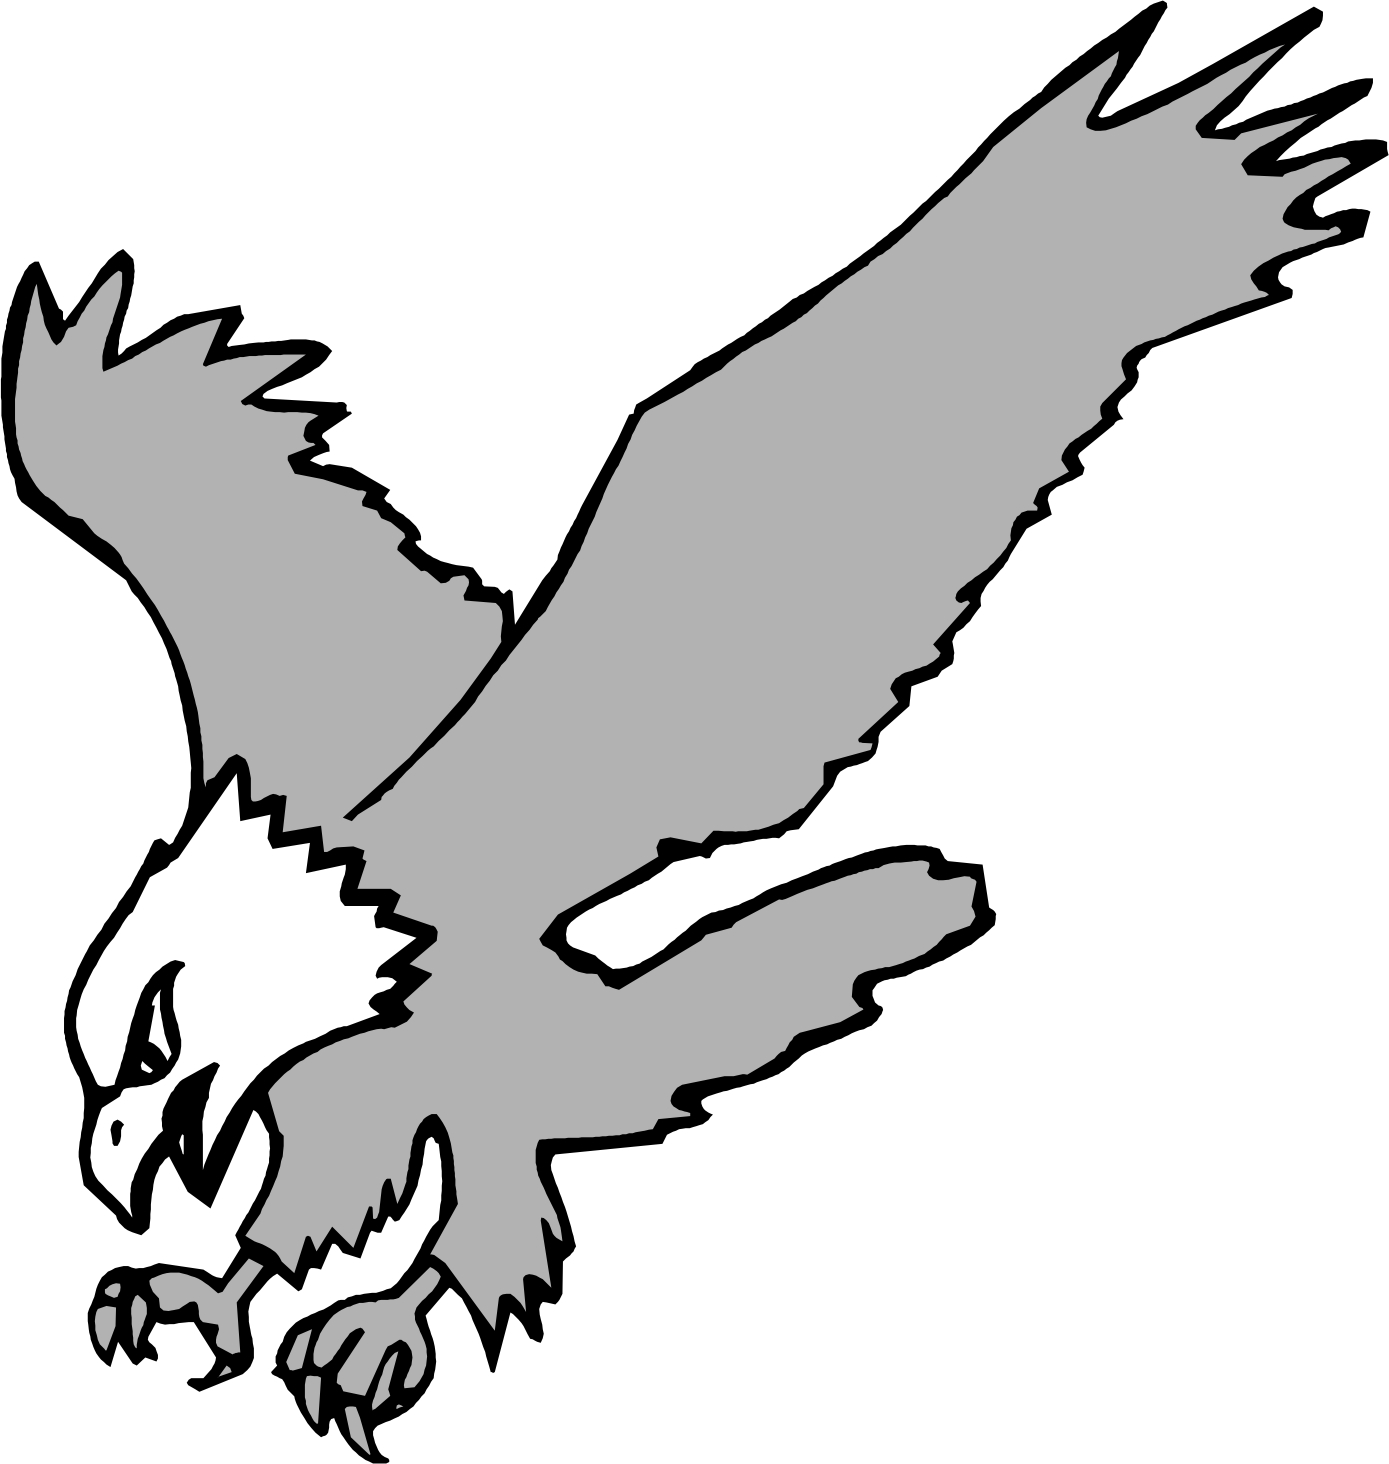 Eagle Cartoon Images - ClipArt Best